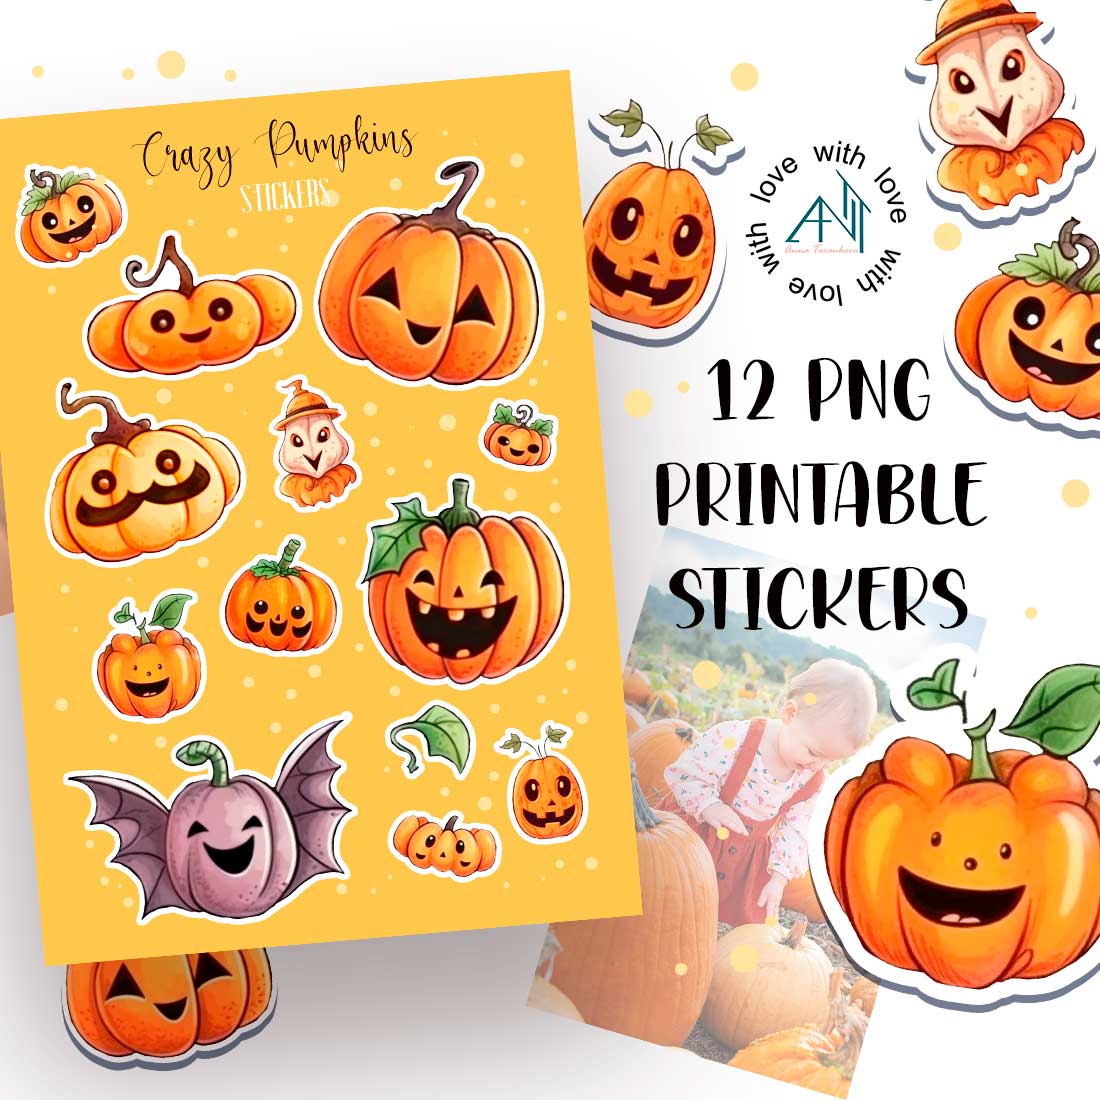 Crazy Pumpkins | 12 png sticker design cover image.